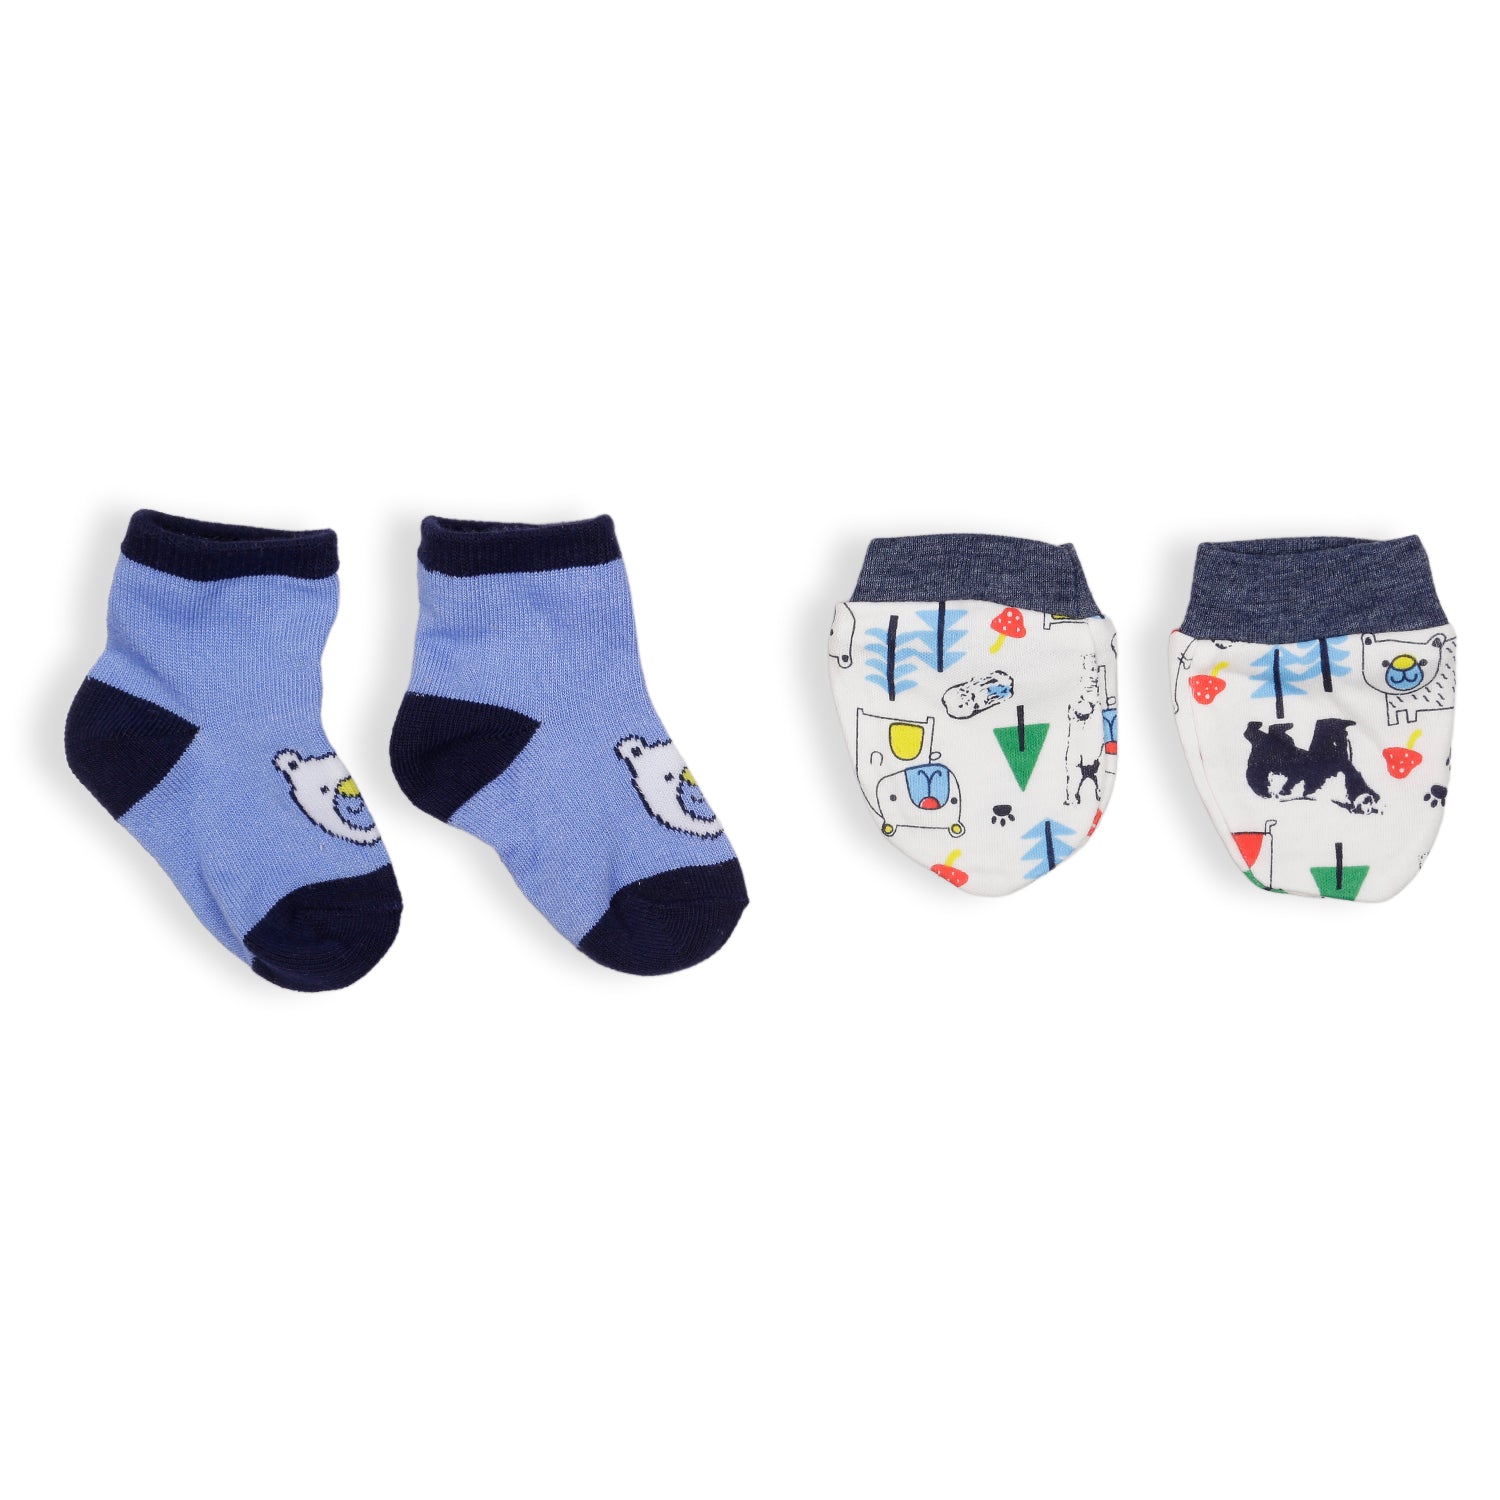 Feeding Bibs Socks And Mittens Set Of 3 Bear Printed Blue